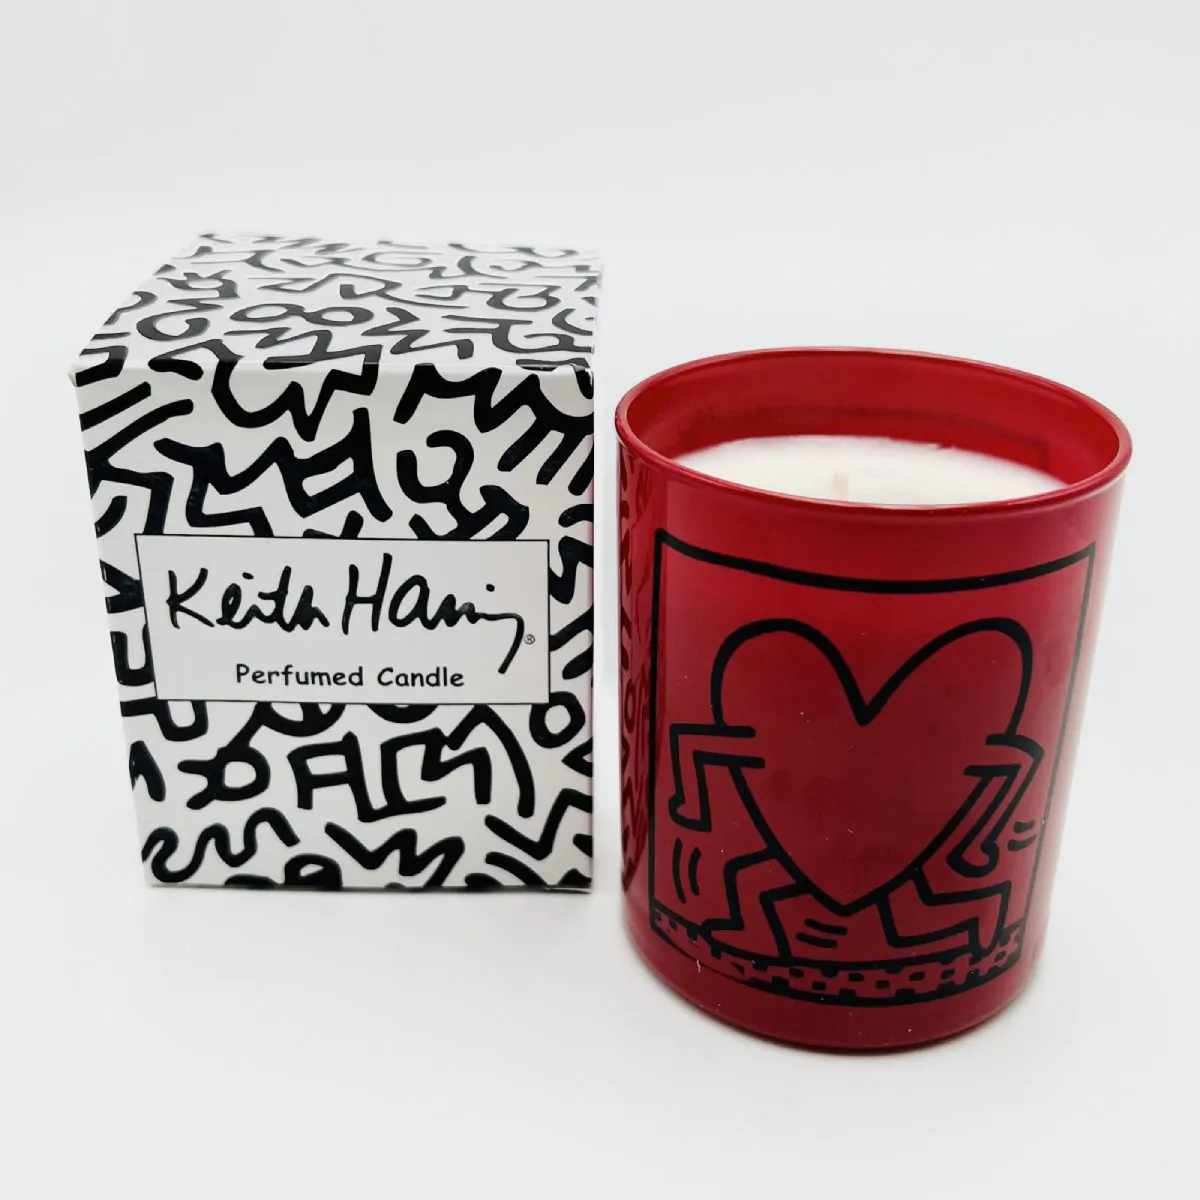 Bougie parfumée Keith Haring